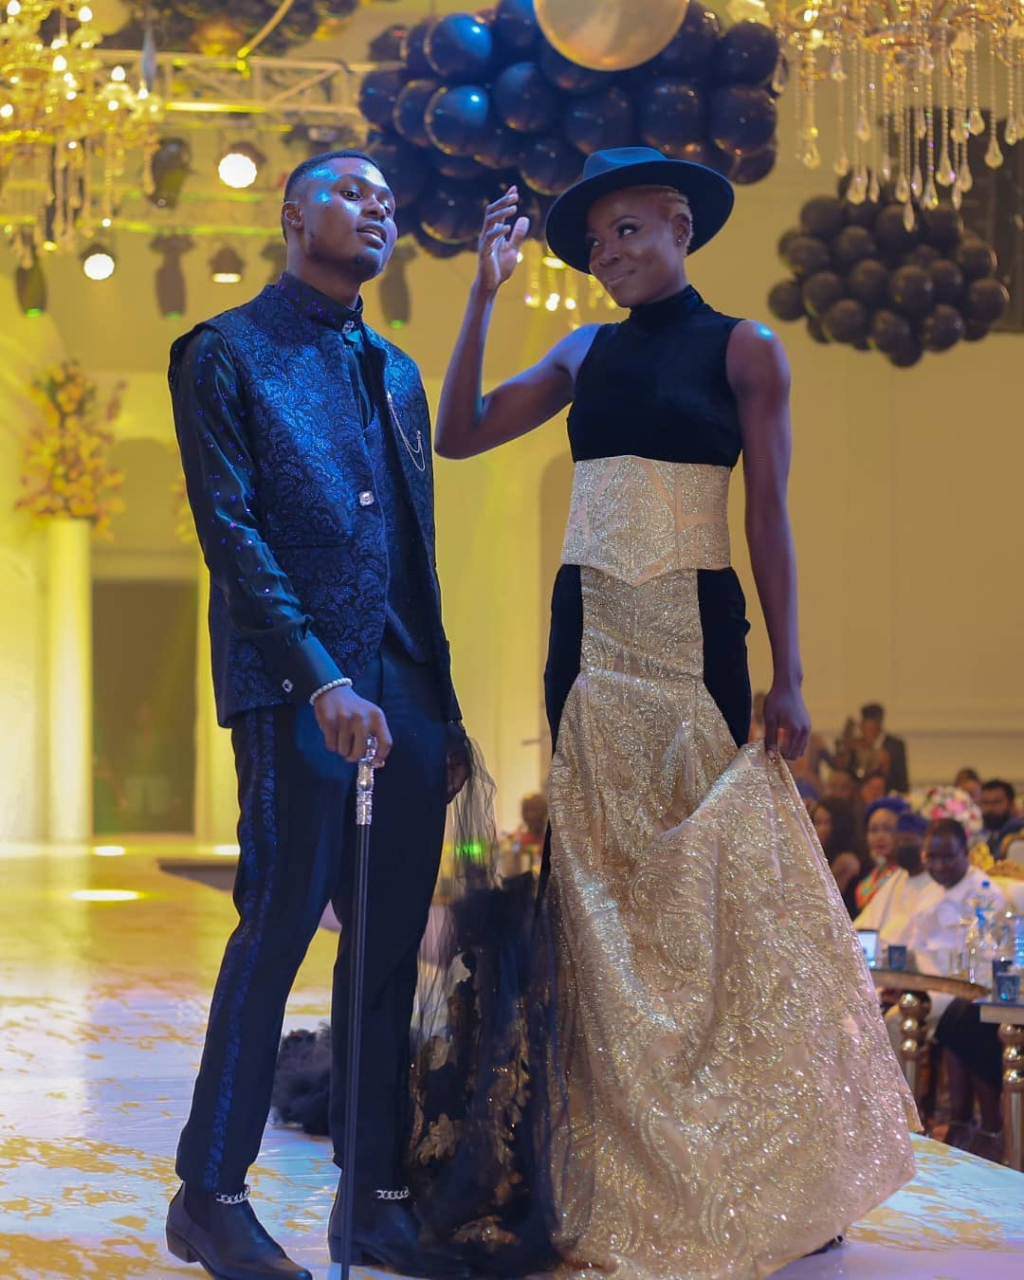 Collins Okoro during a fashion show | Photo: Private